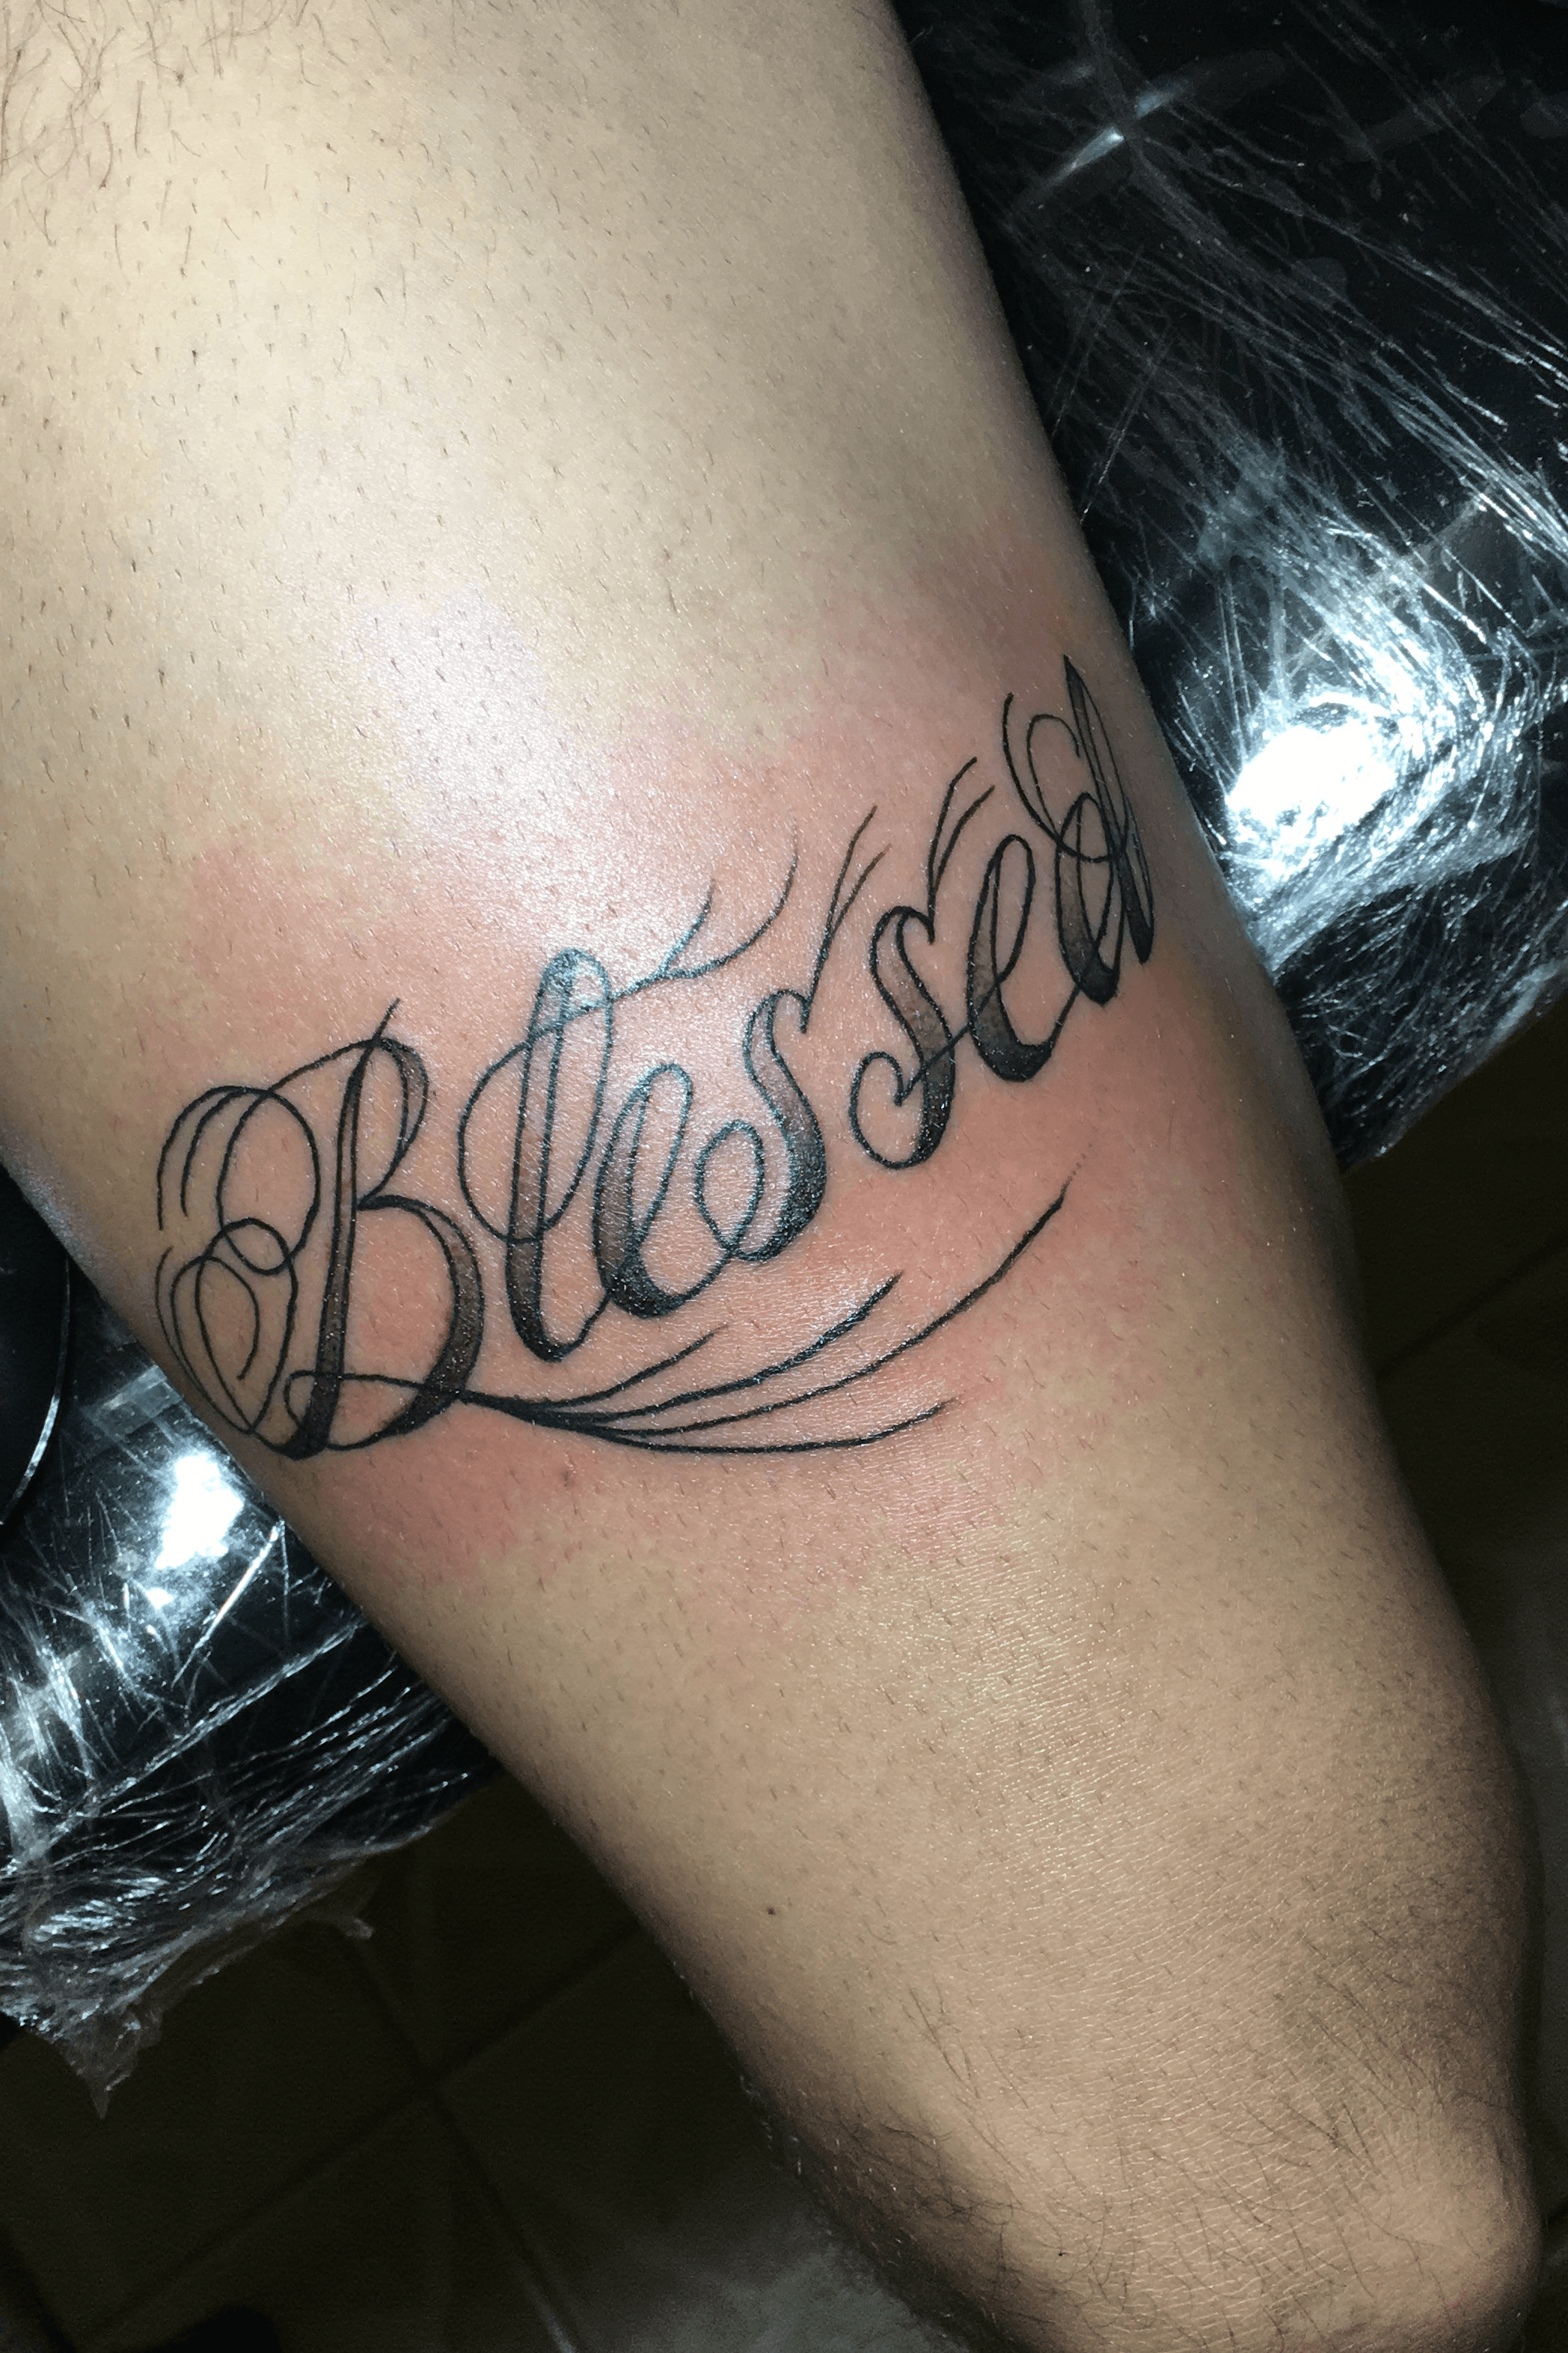 60 Blessed Tattoos For Men  Biblical Lettering Design Ideas